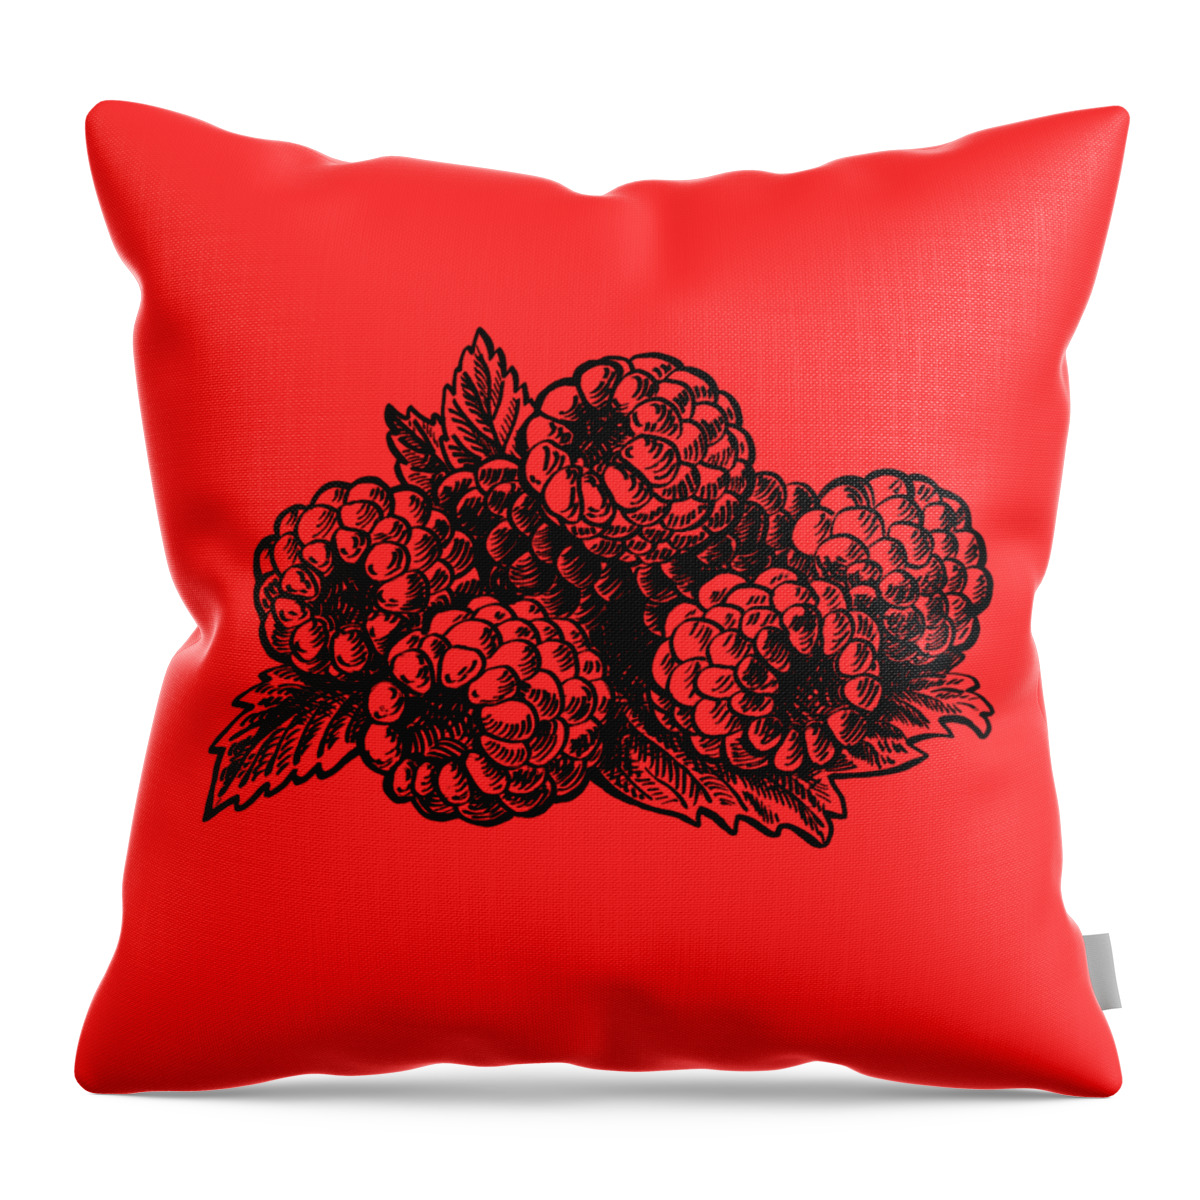 Raspberries Throw Pillow featuring the painting Raspberries Image by Irina Sztukowski